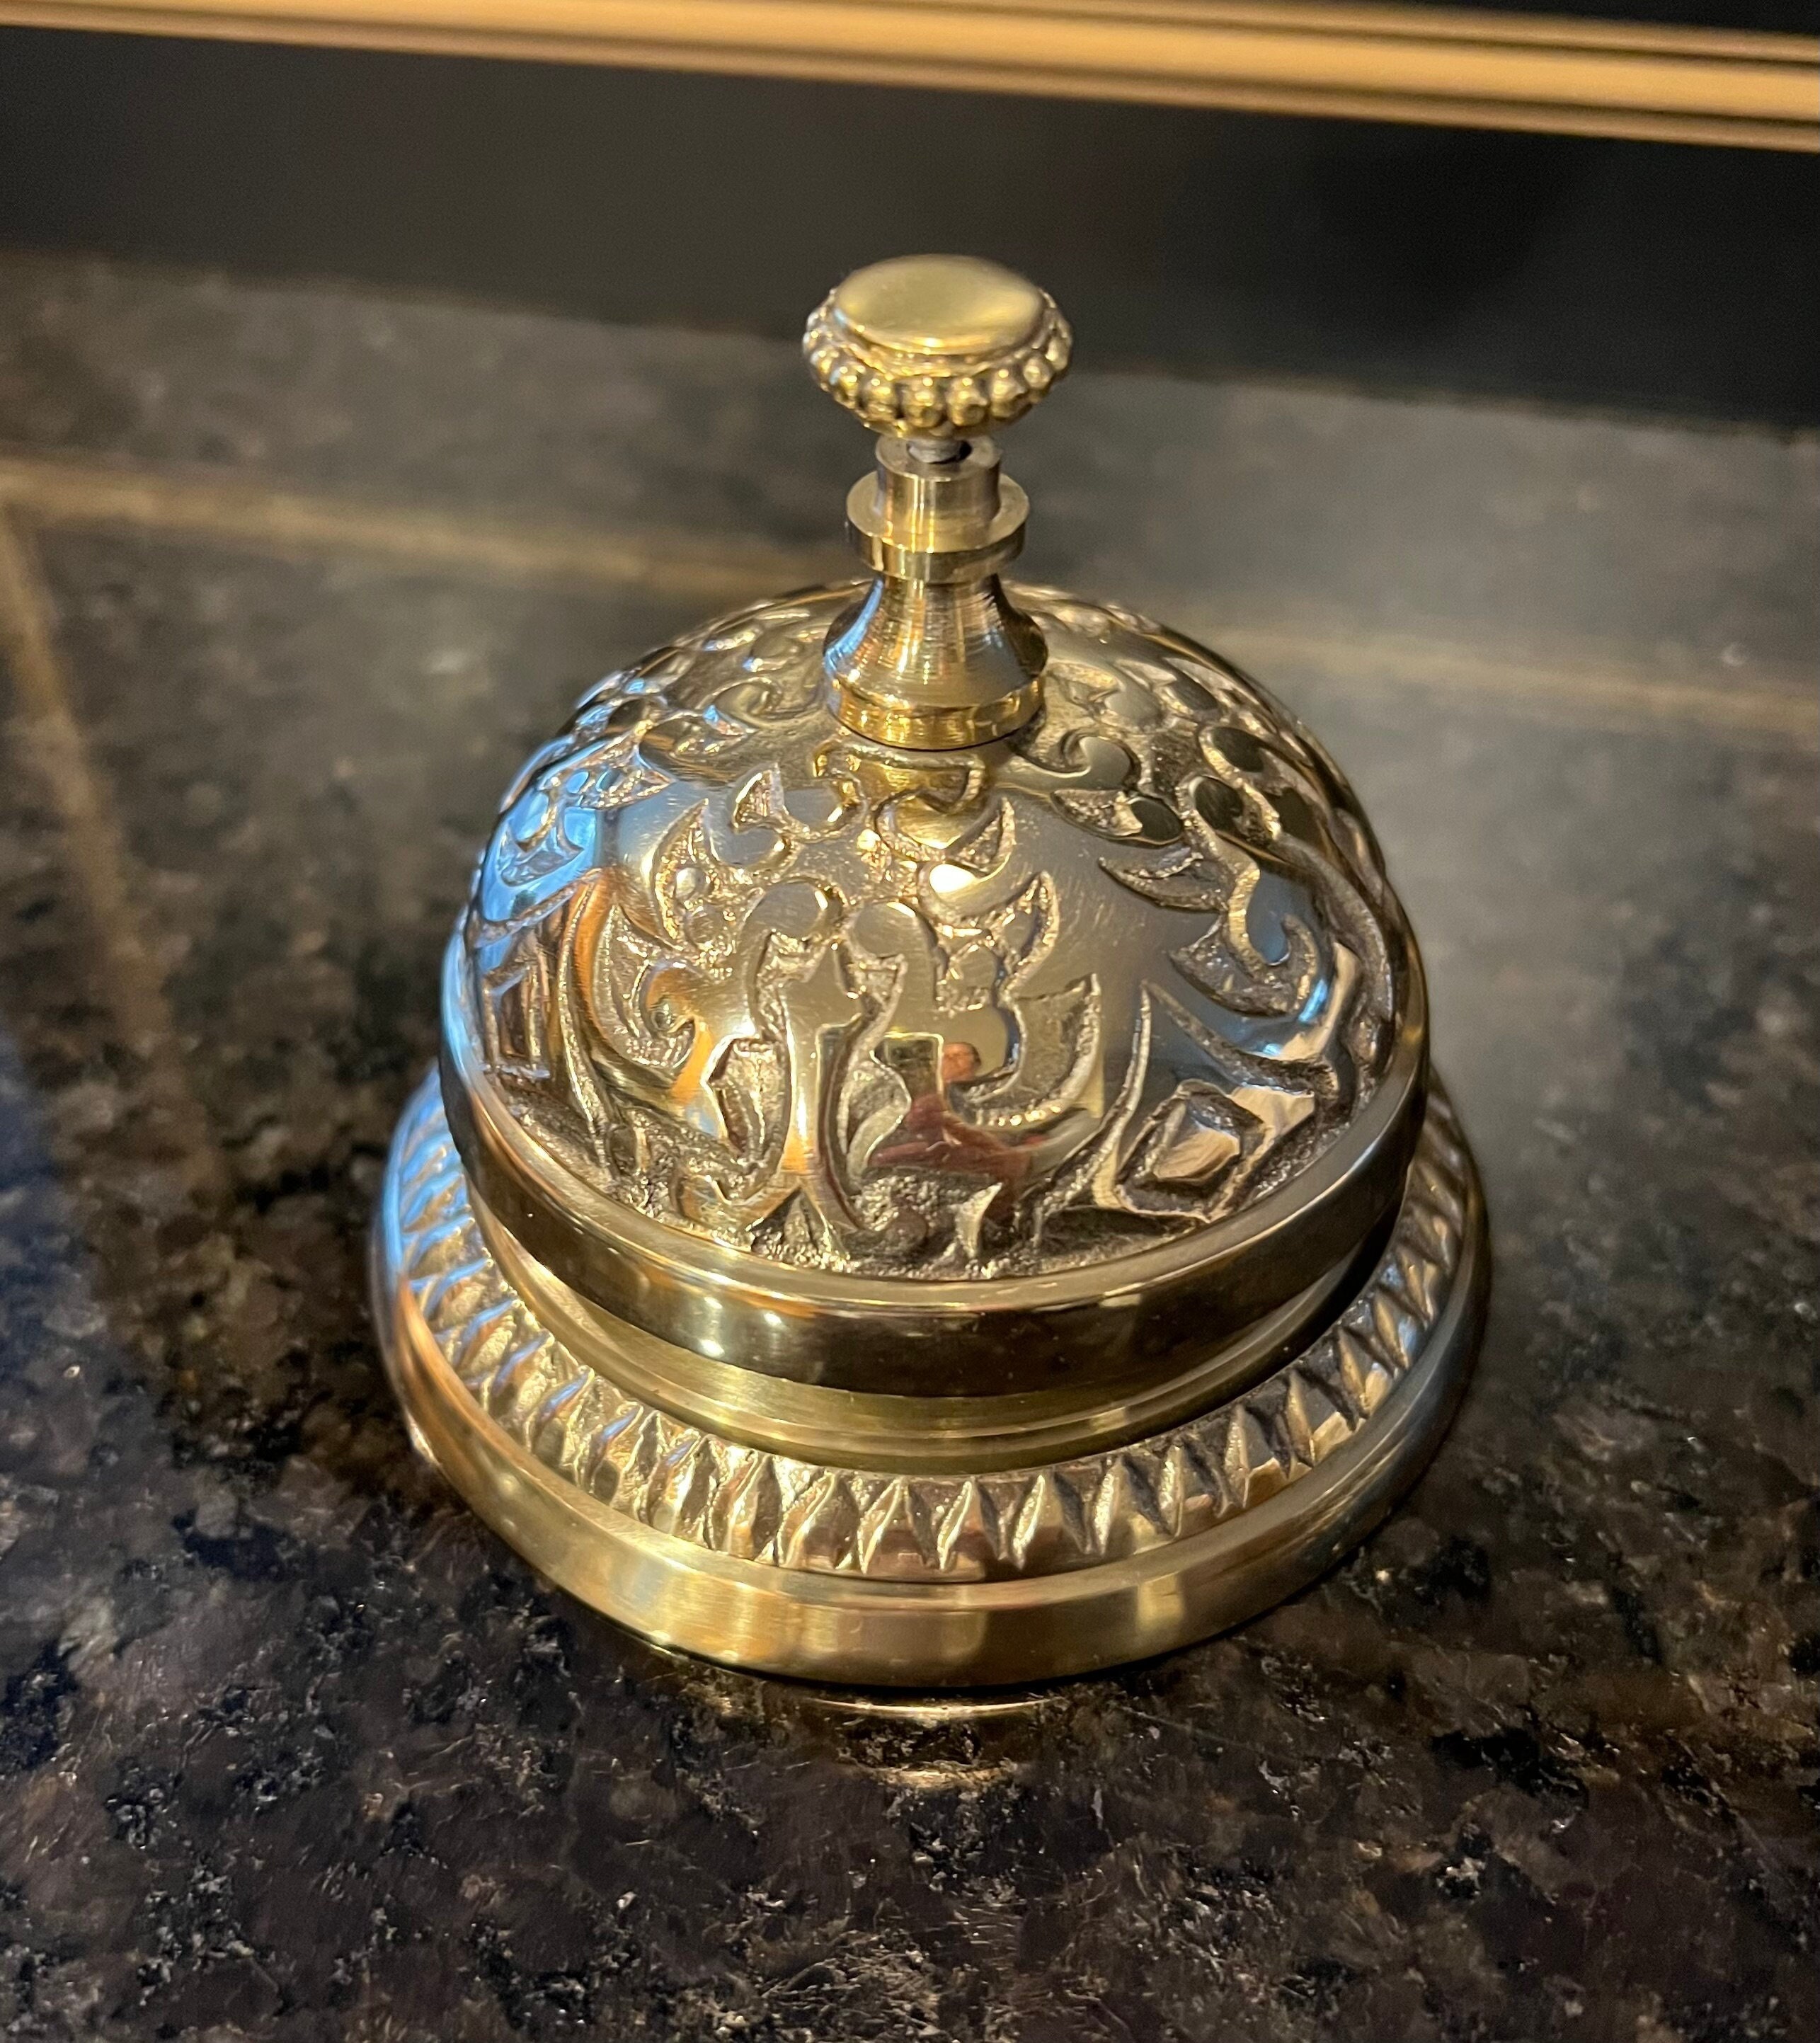 Antique Brass Hotel Bell With Flower Design - Anthologist